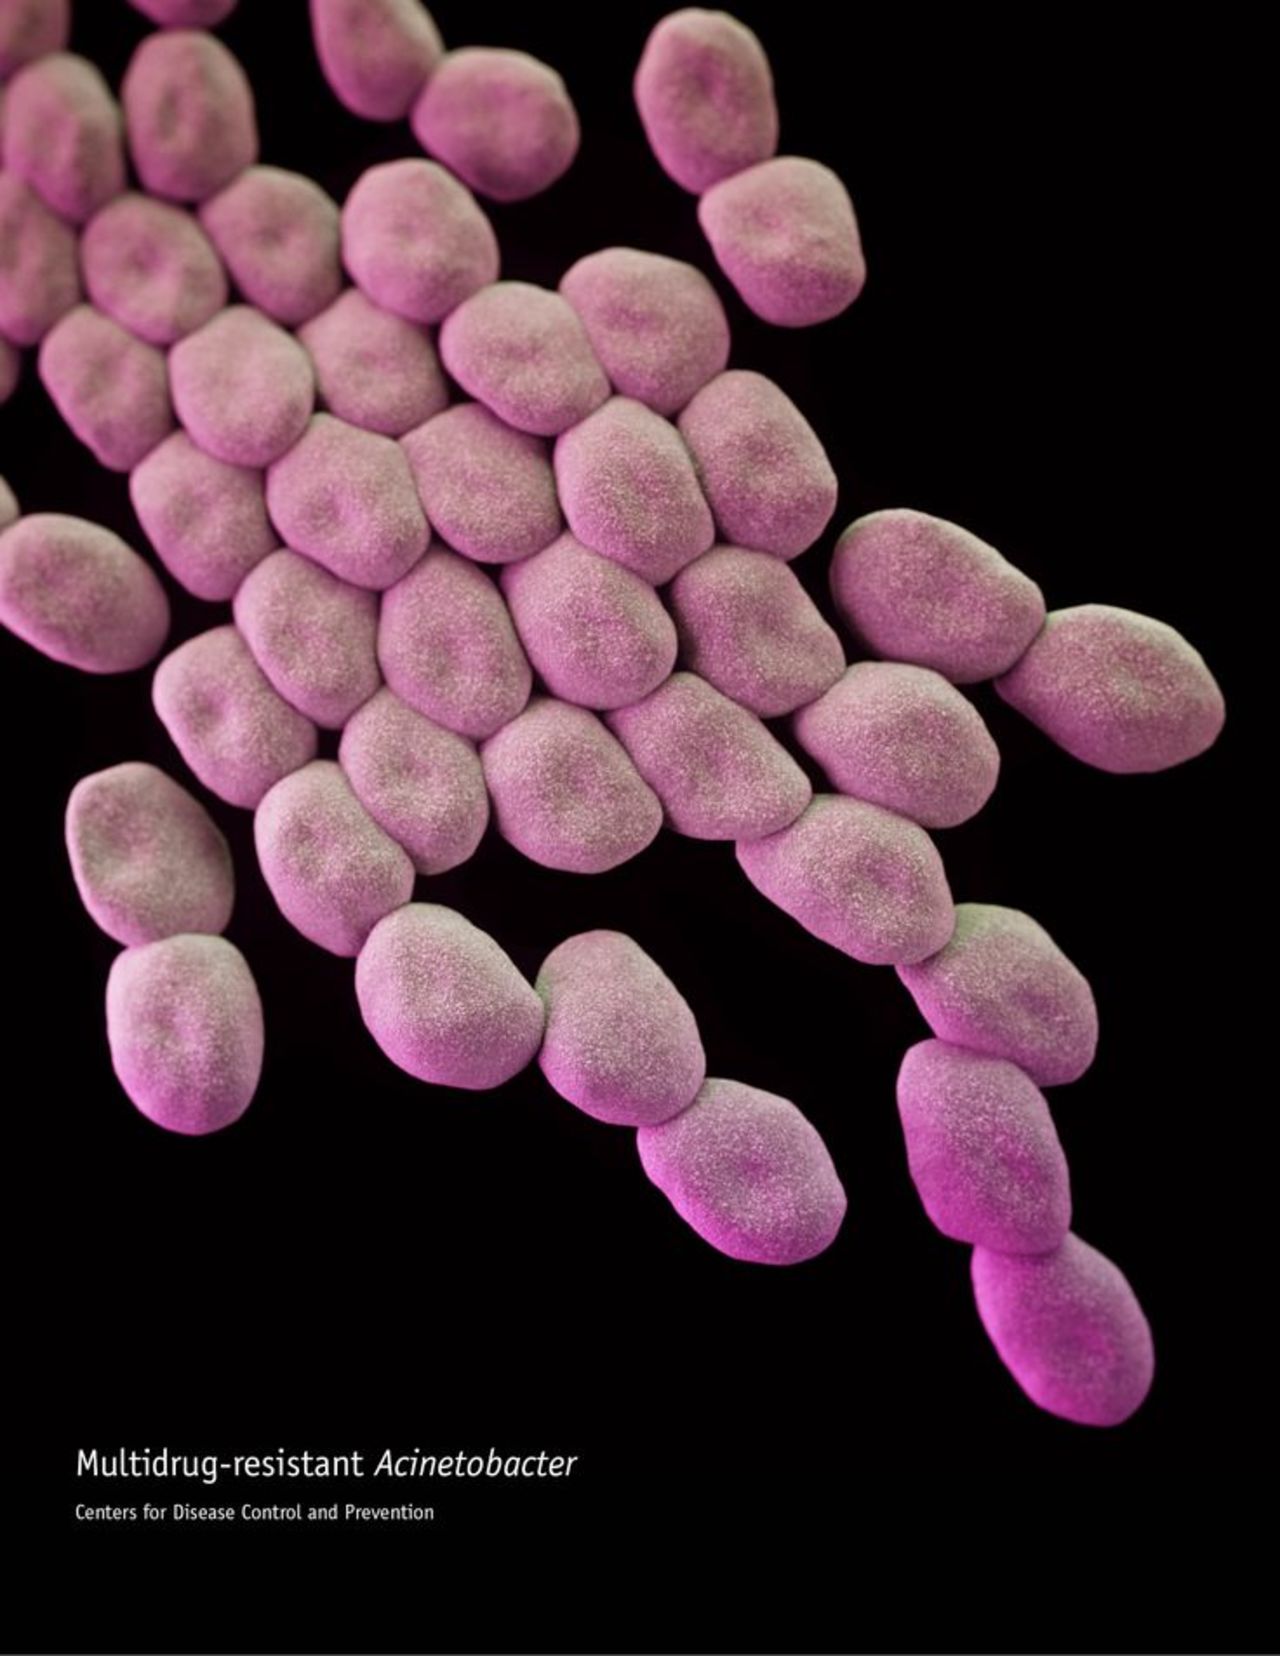 Drug-resistant Acinetobacter